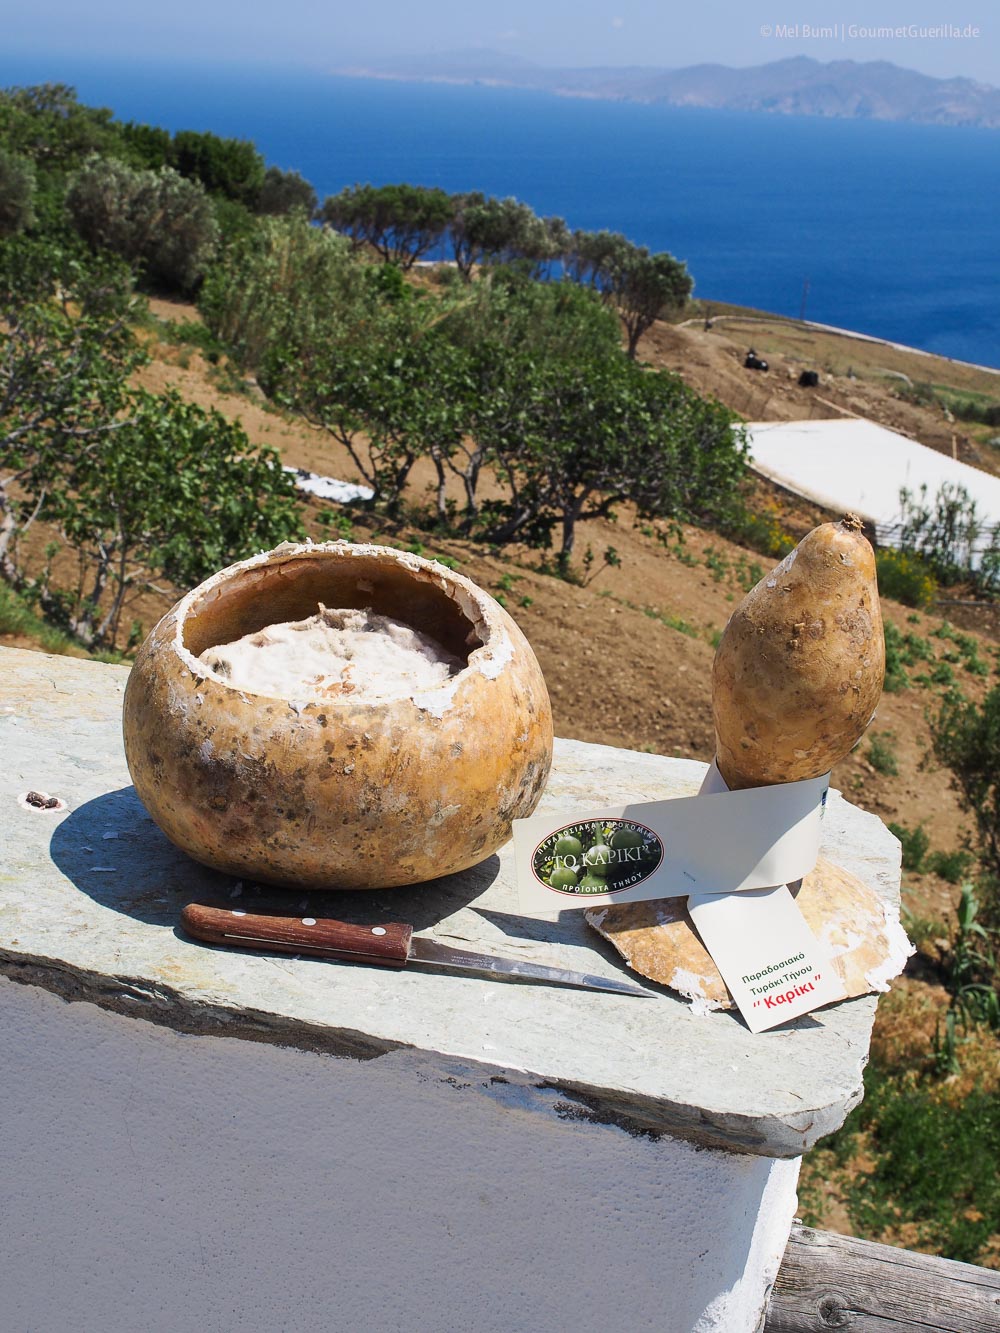  Kapiki travelogue Tinos Foodpath Greek island of Cyclades Greece | GourmetGuerilla .de 